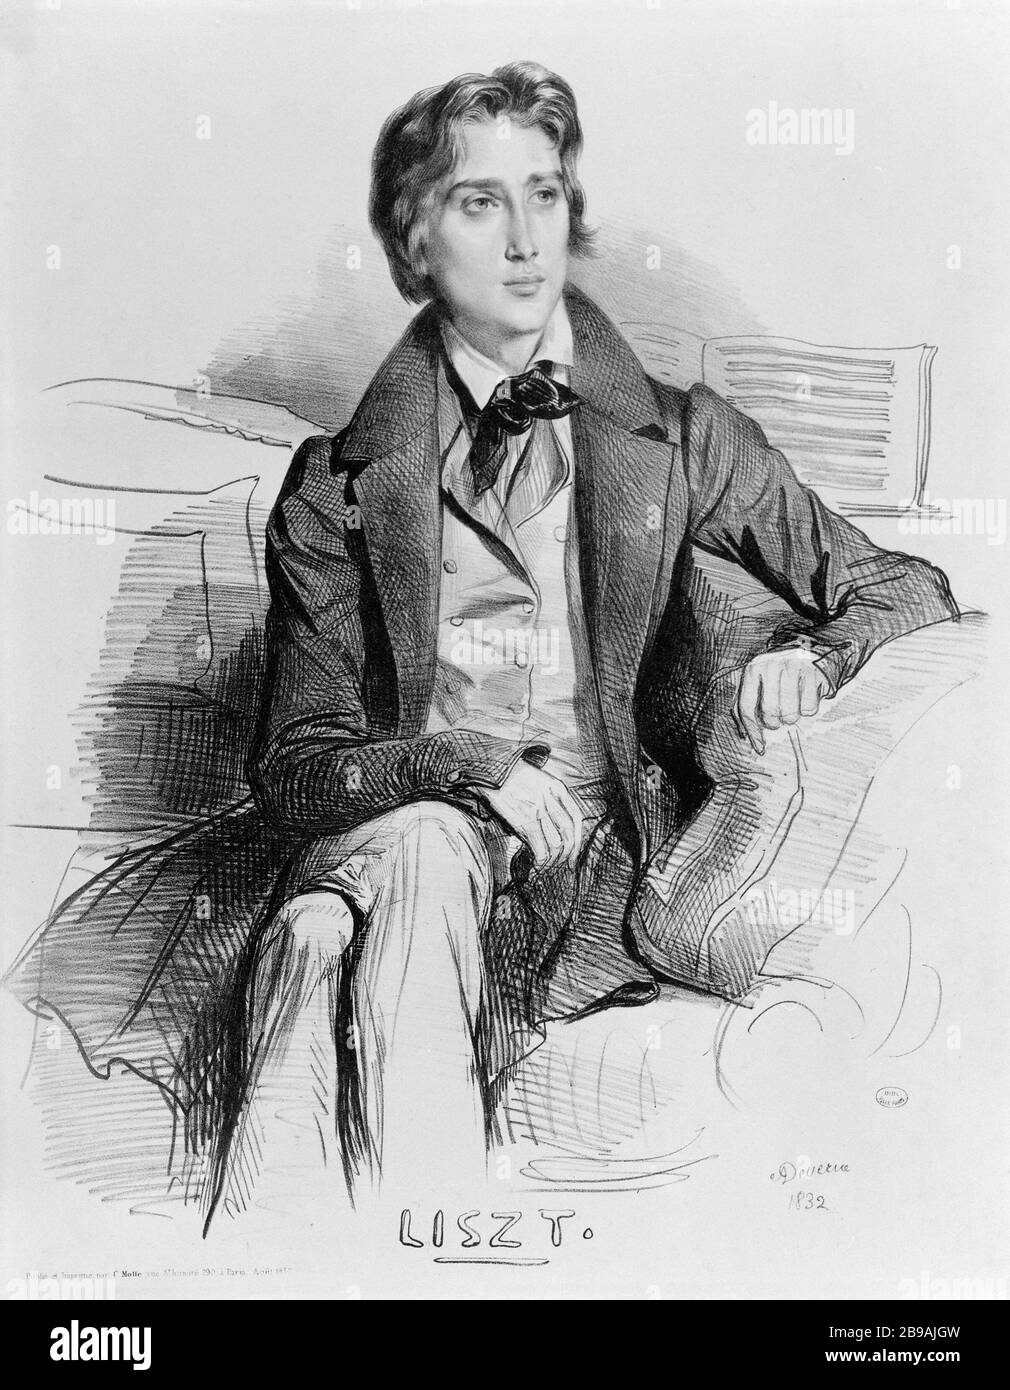 RITRATTO DI FARINA Achille Deveria (1800-1857). 'Portrait de Liszt'. Gravure, 1832. Parigi, musée Carnavalet. Foto Stock